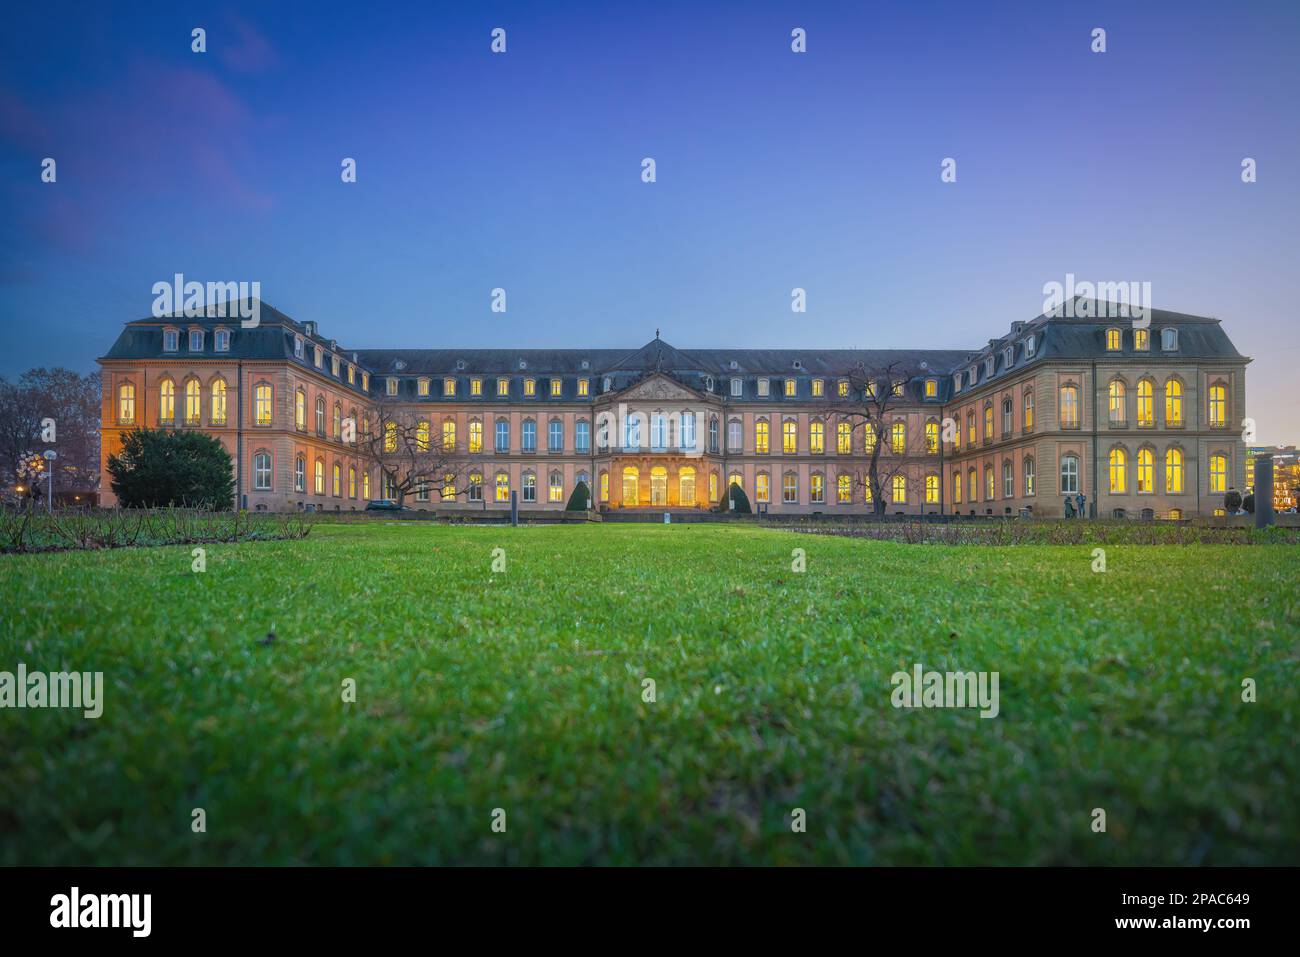 Neues Schloss (New Palace) at sunset - Stuttgart, Germany Stock Photo